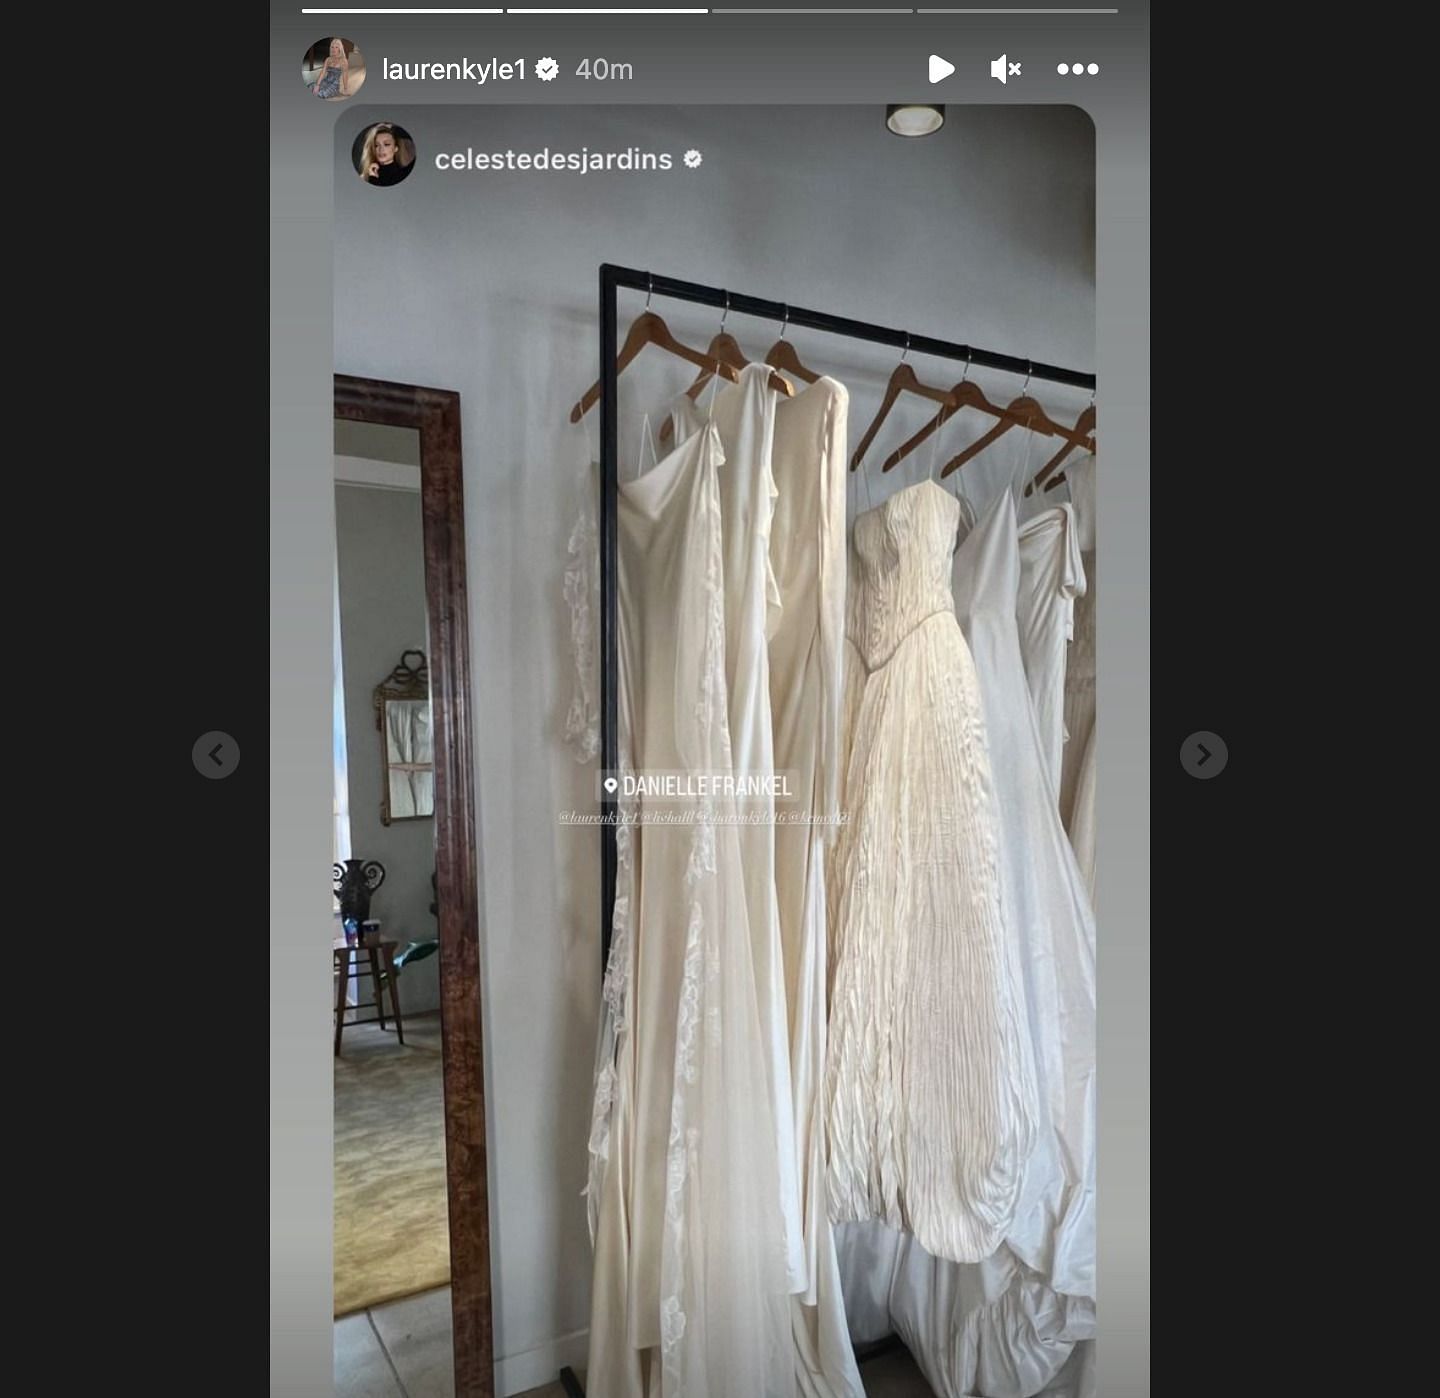 IN PHOTOS: Connor McDavid's fiancée Lauren Kyle teases wedding gown as ...